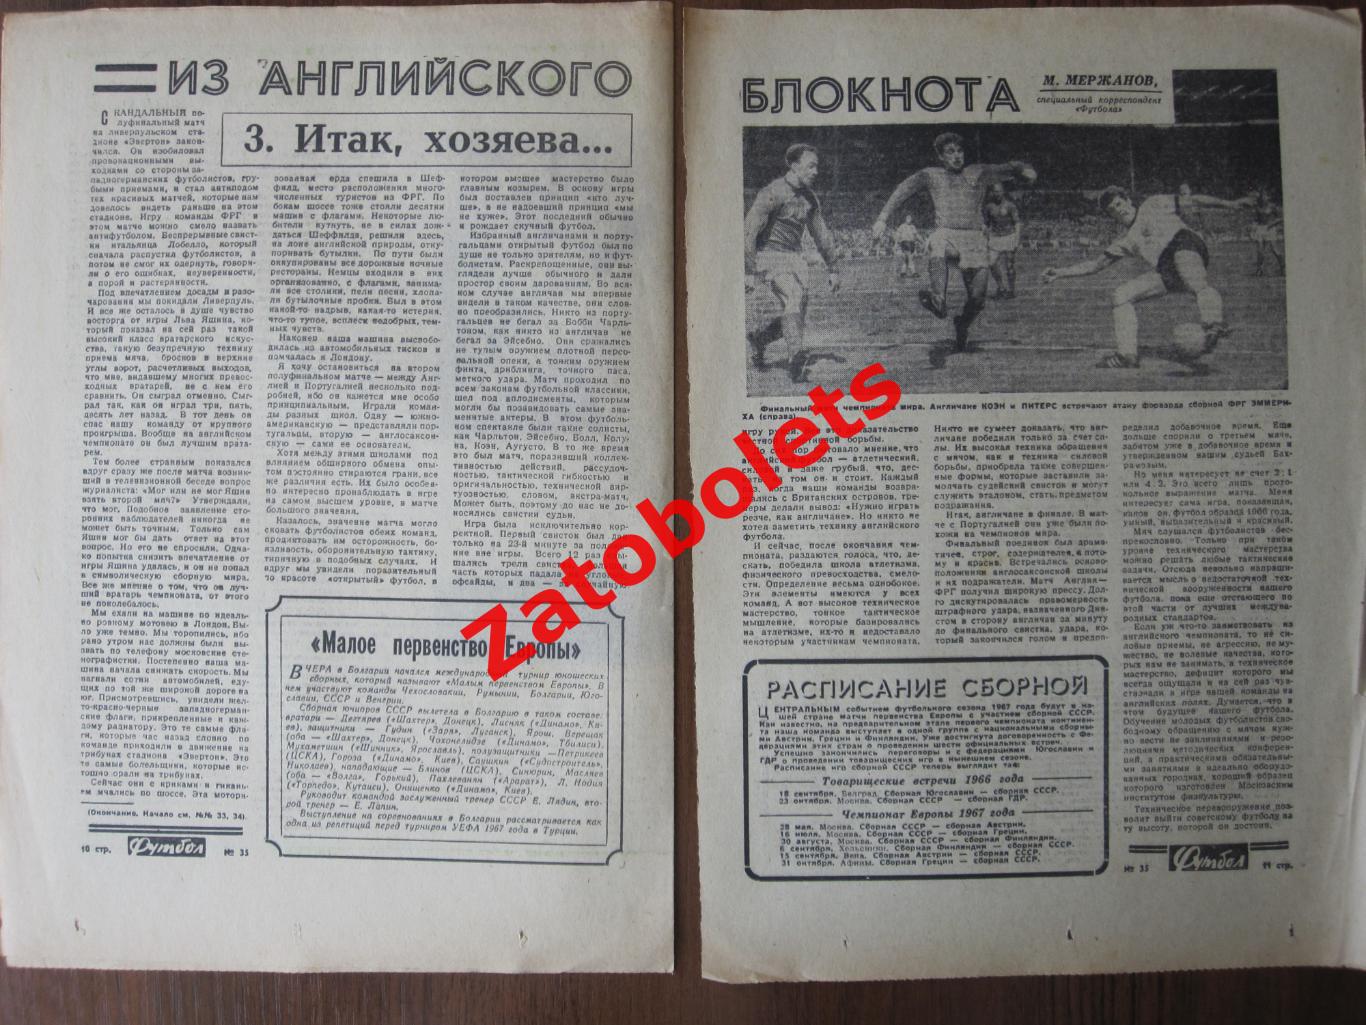 35-1966 Футбол Галимзян Хусаинов / Мержанов. Из английского блокнота 1